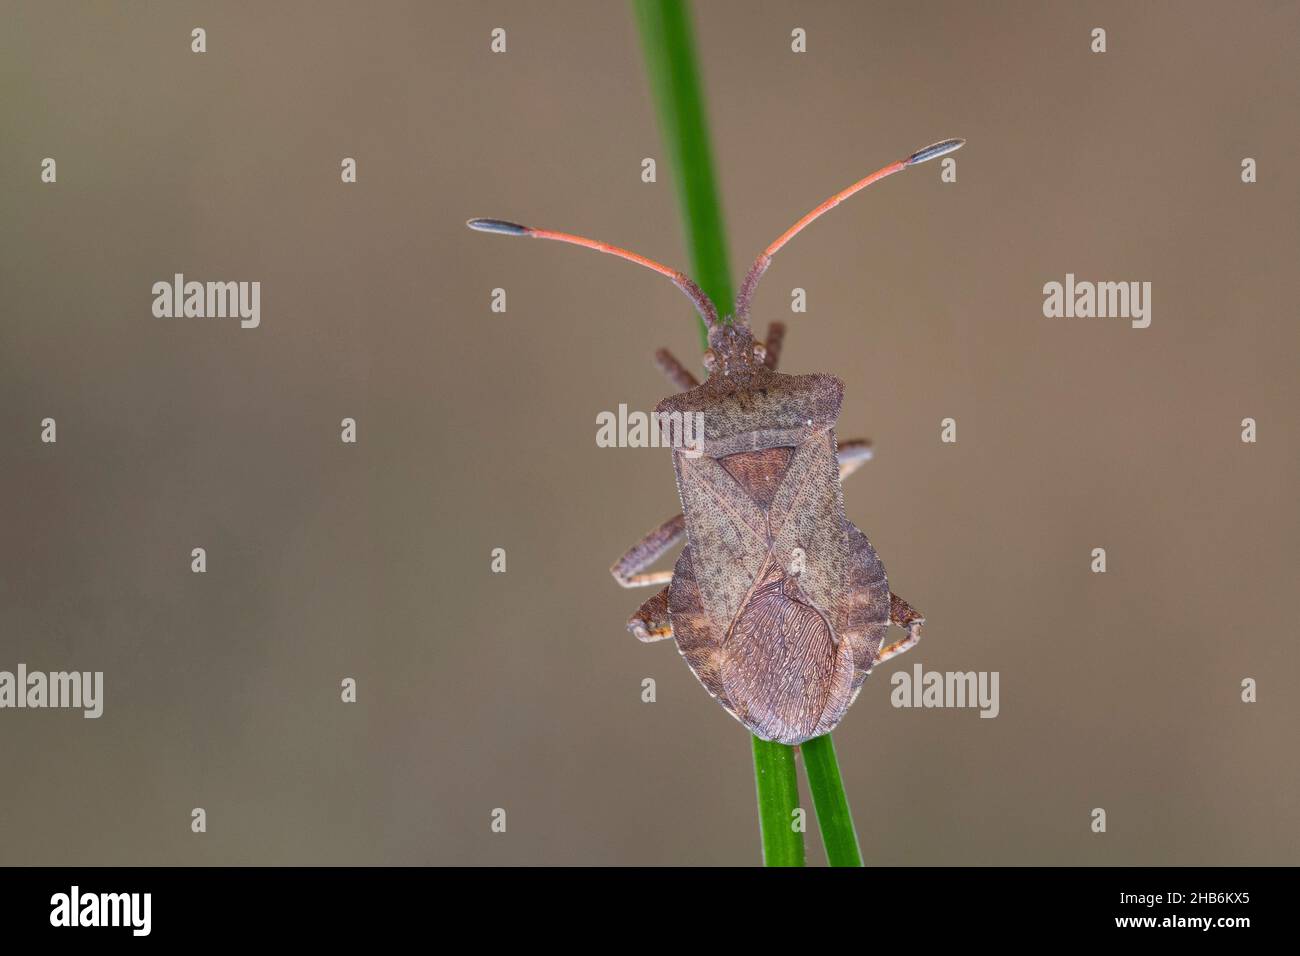 Squash bug (Coreus marginatus, Mesocerus marginatus), siede a una lama di erba, Germania Foto Stock